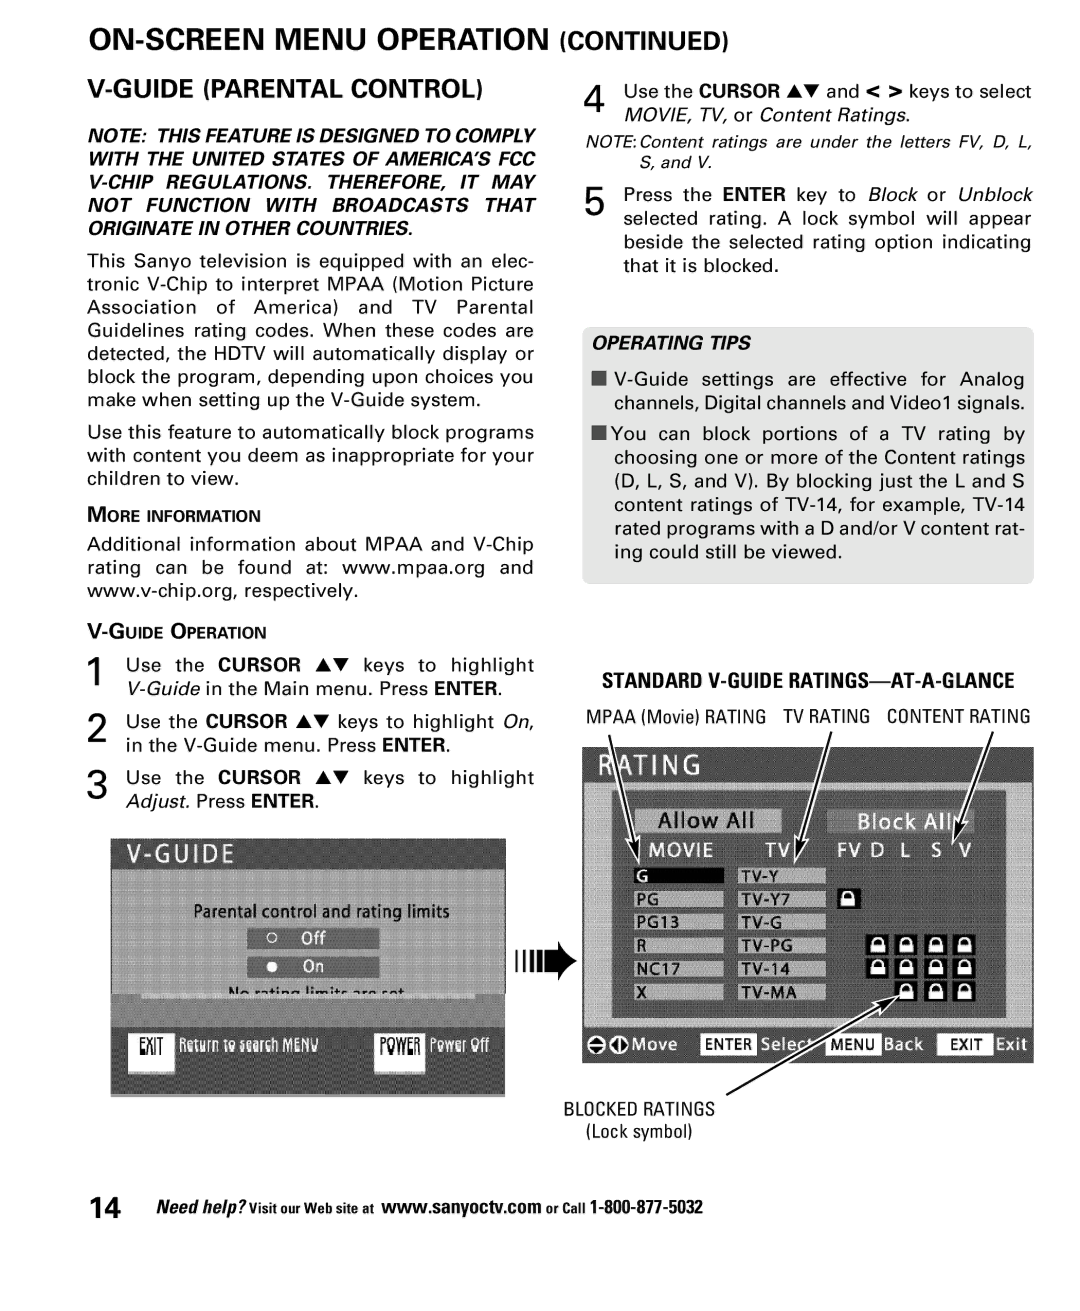 Sanyo DP52848 owner manual Guide Parental Control, Operating Tips 